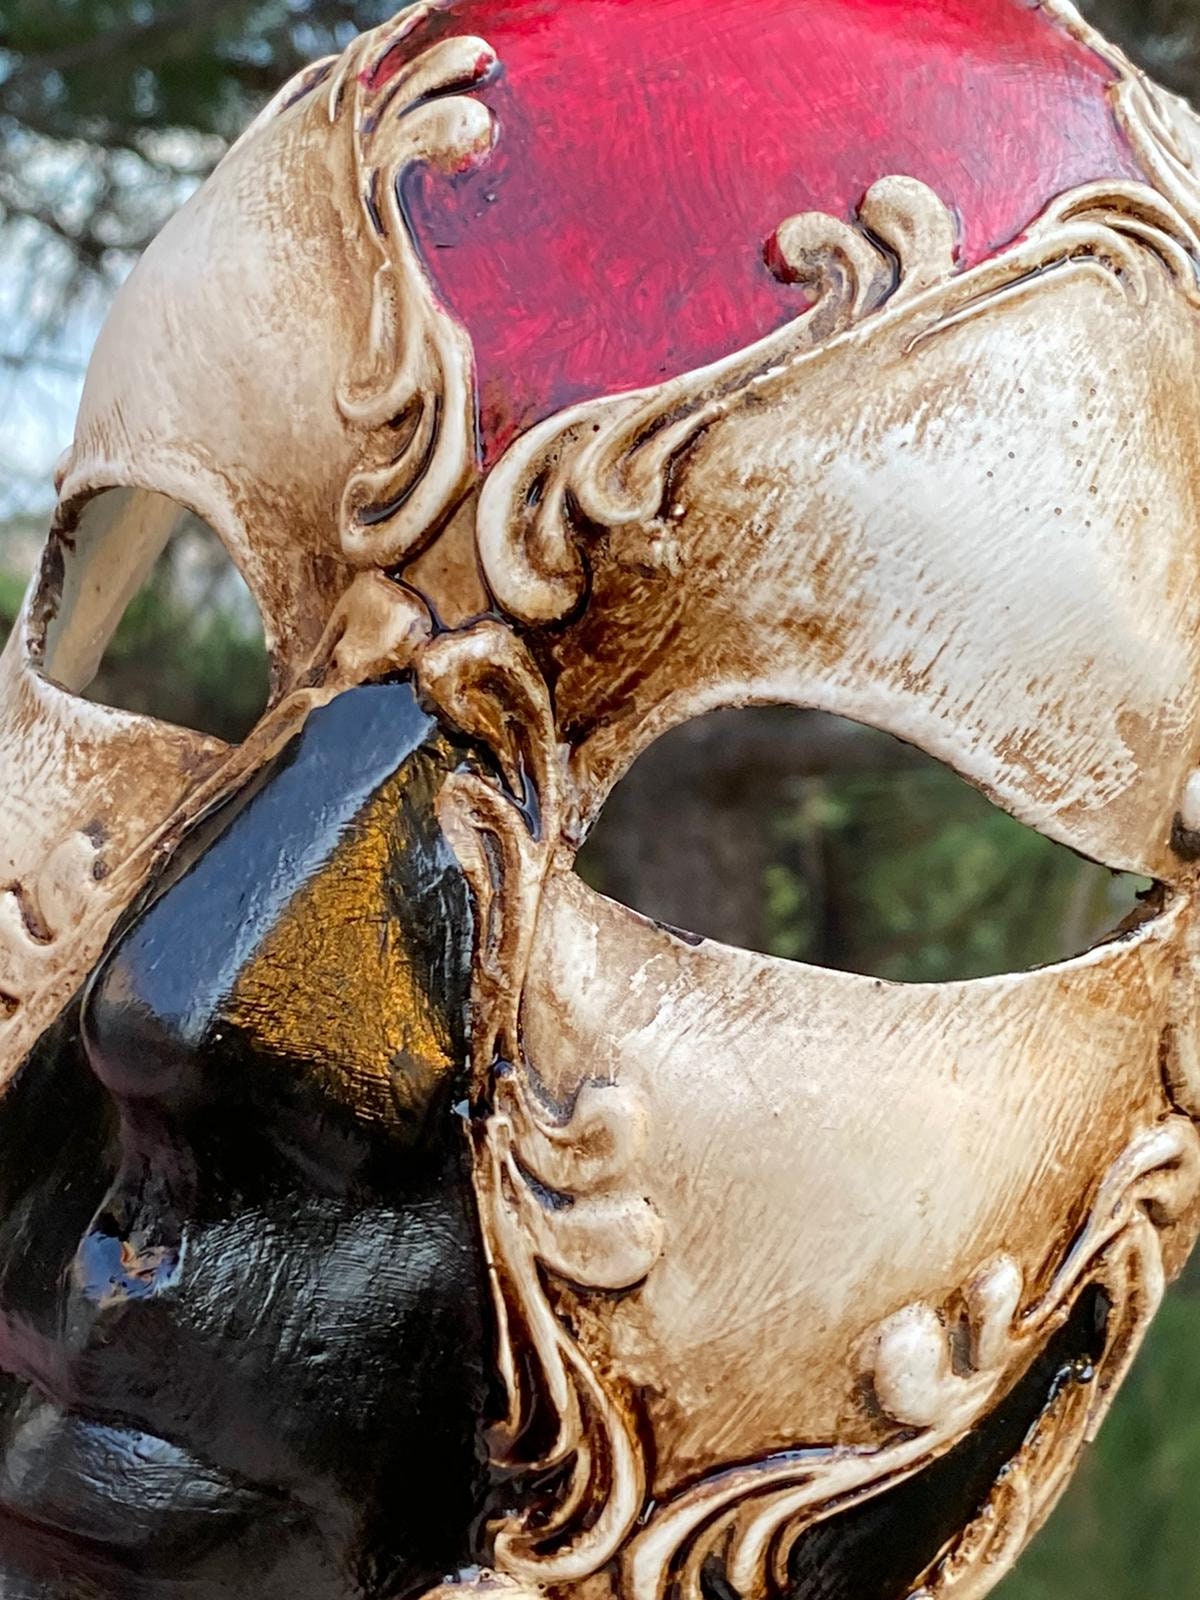 Durango full face Venetian mask. Woman Man.Handmade in papier-mâché.With gold foil.Old Italian technique.